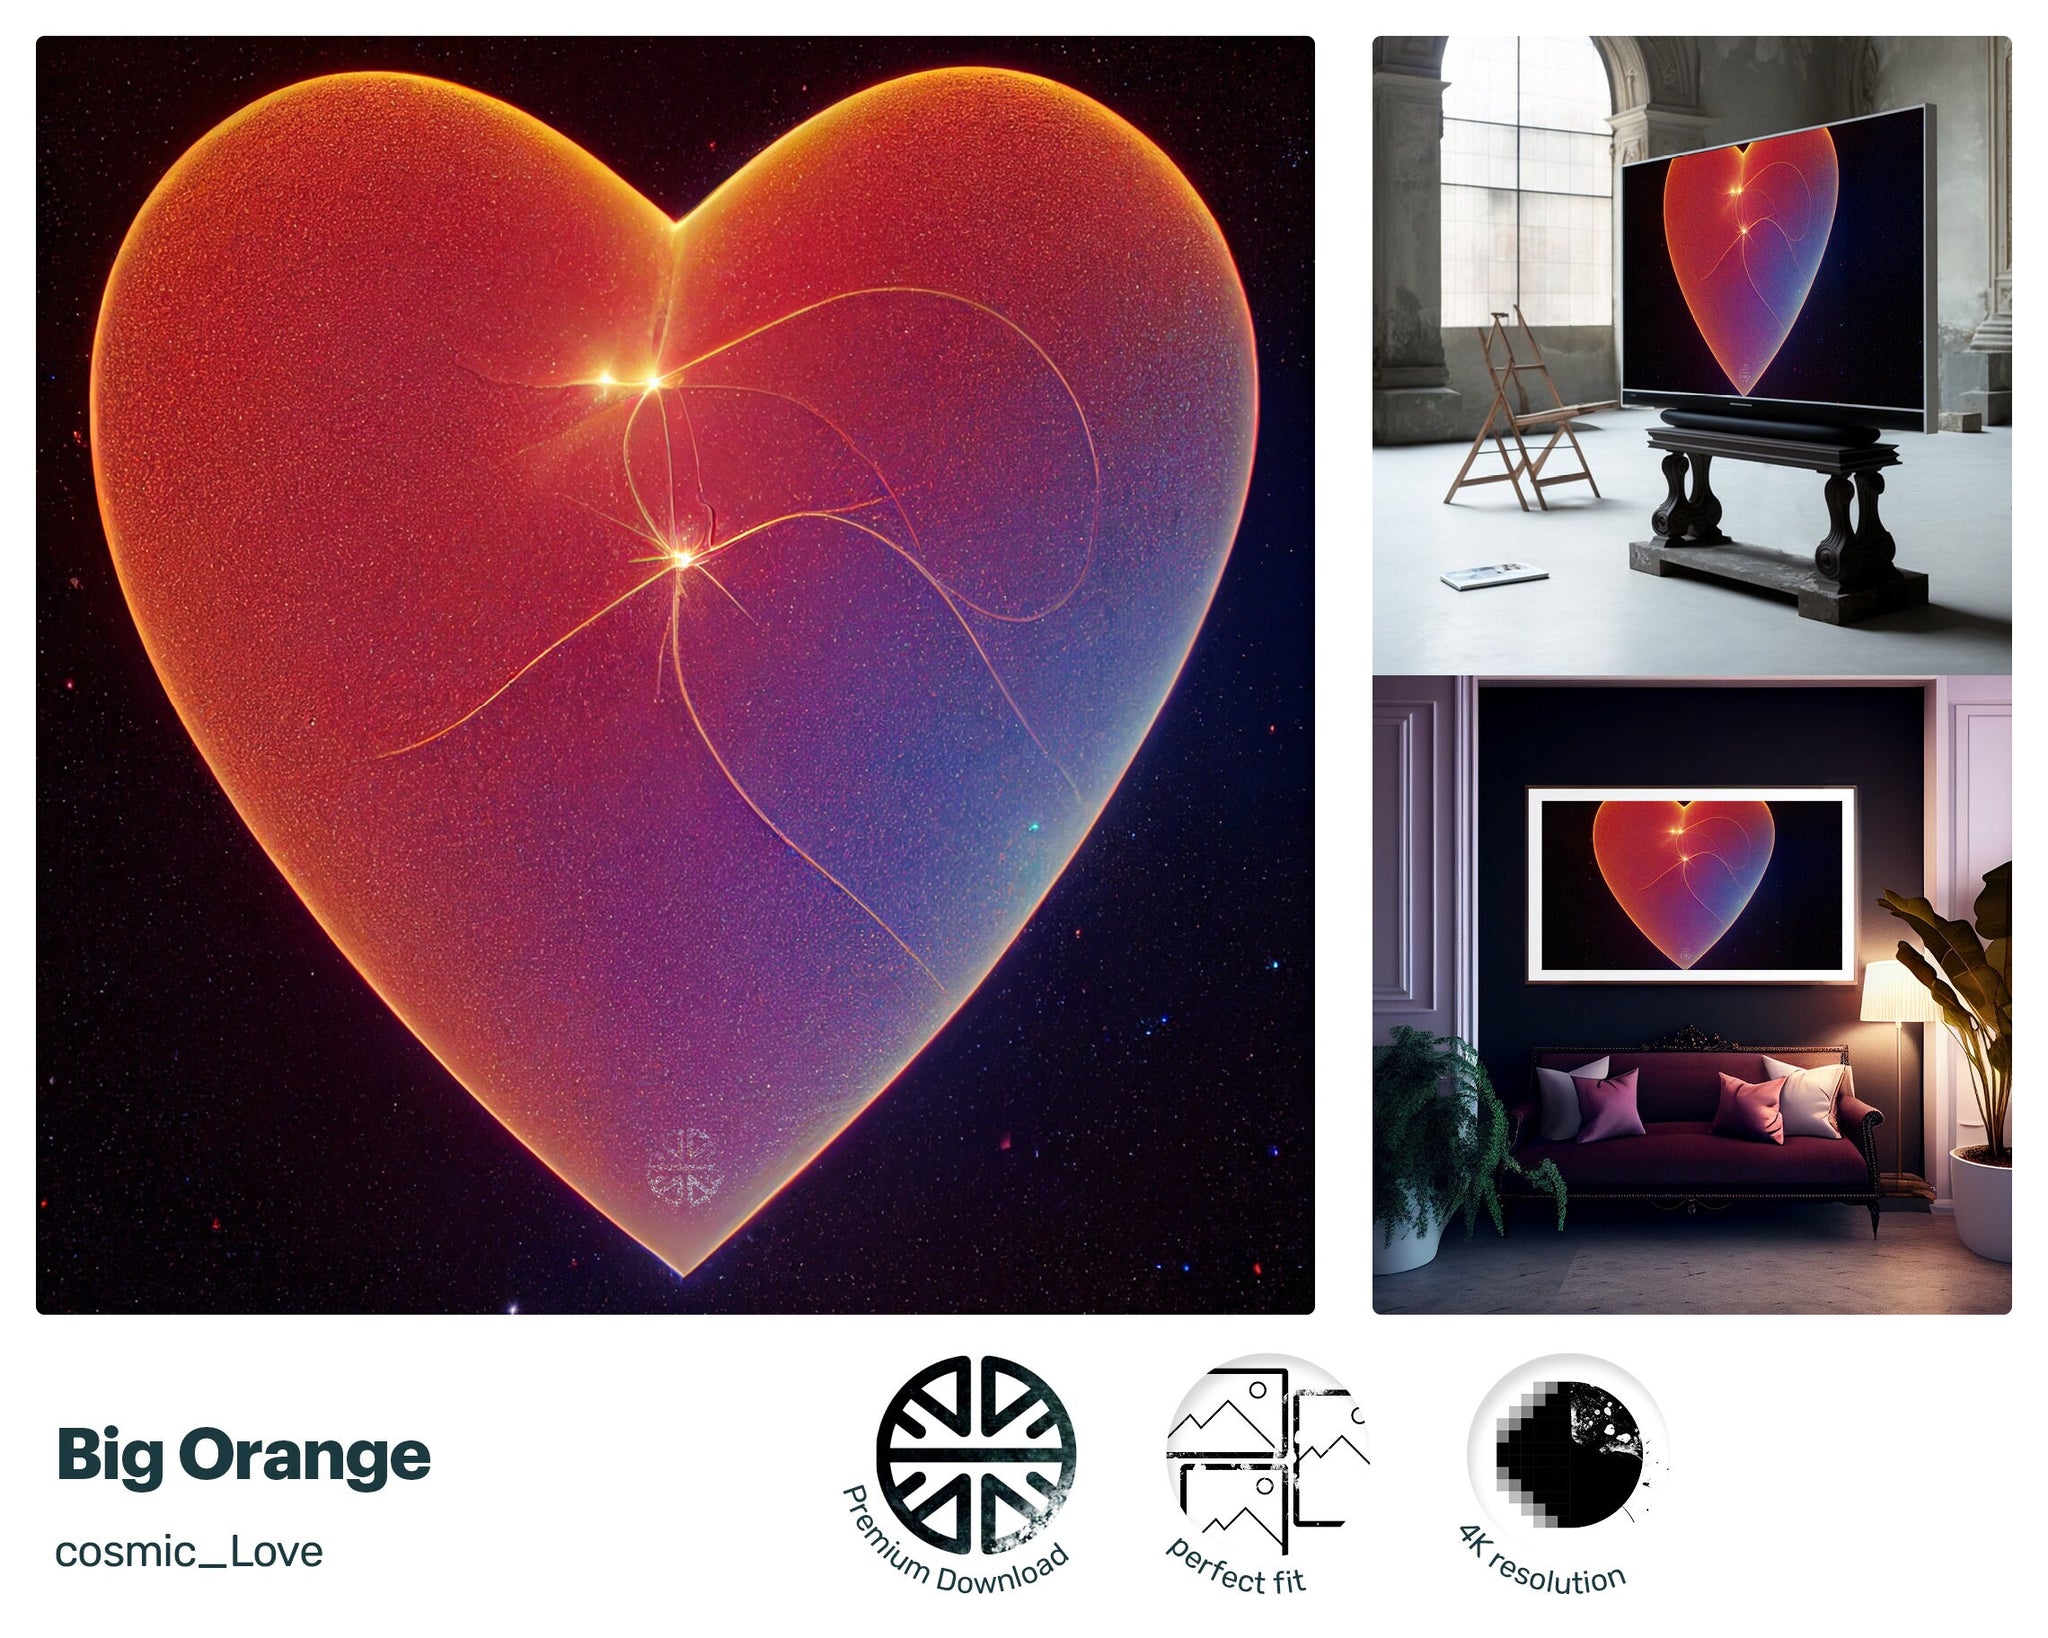 Samsung Frame TV Art, Big Orange, james webb telescope, nerd culture, 2001 Space Odyssey, mens valentines gift